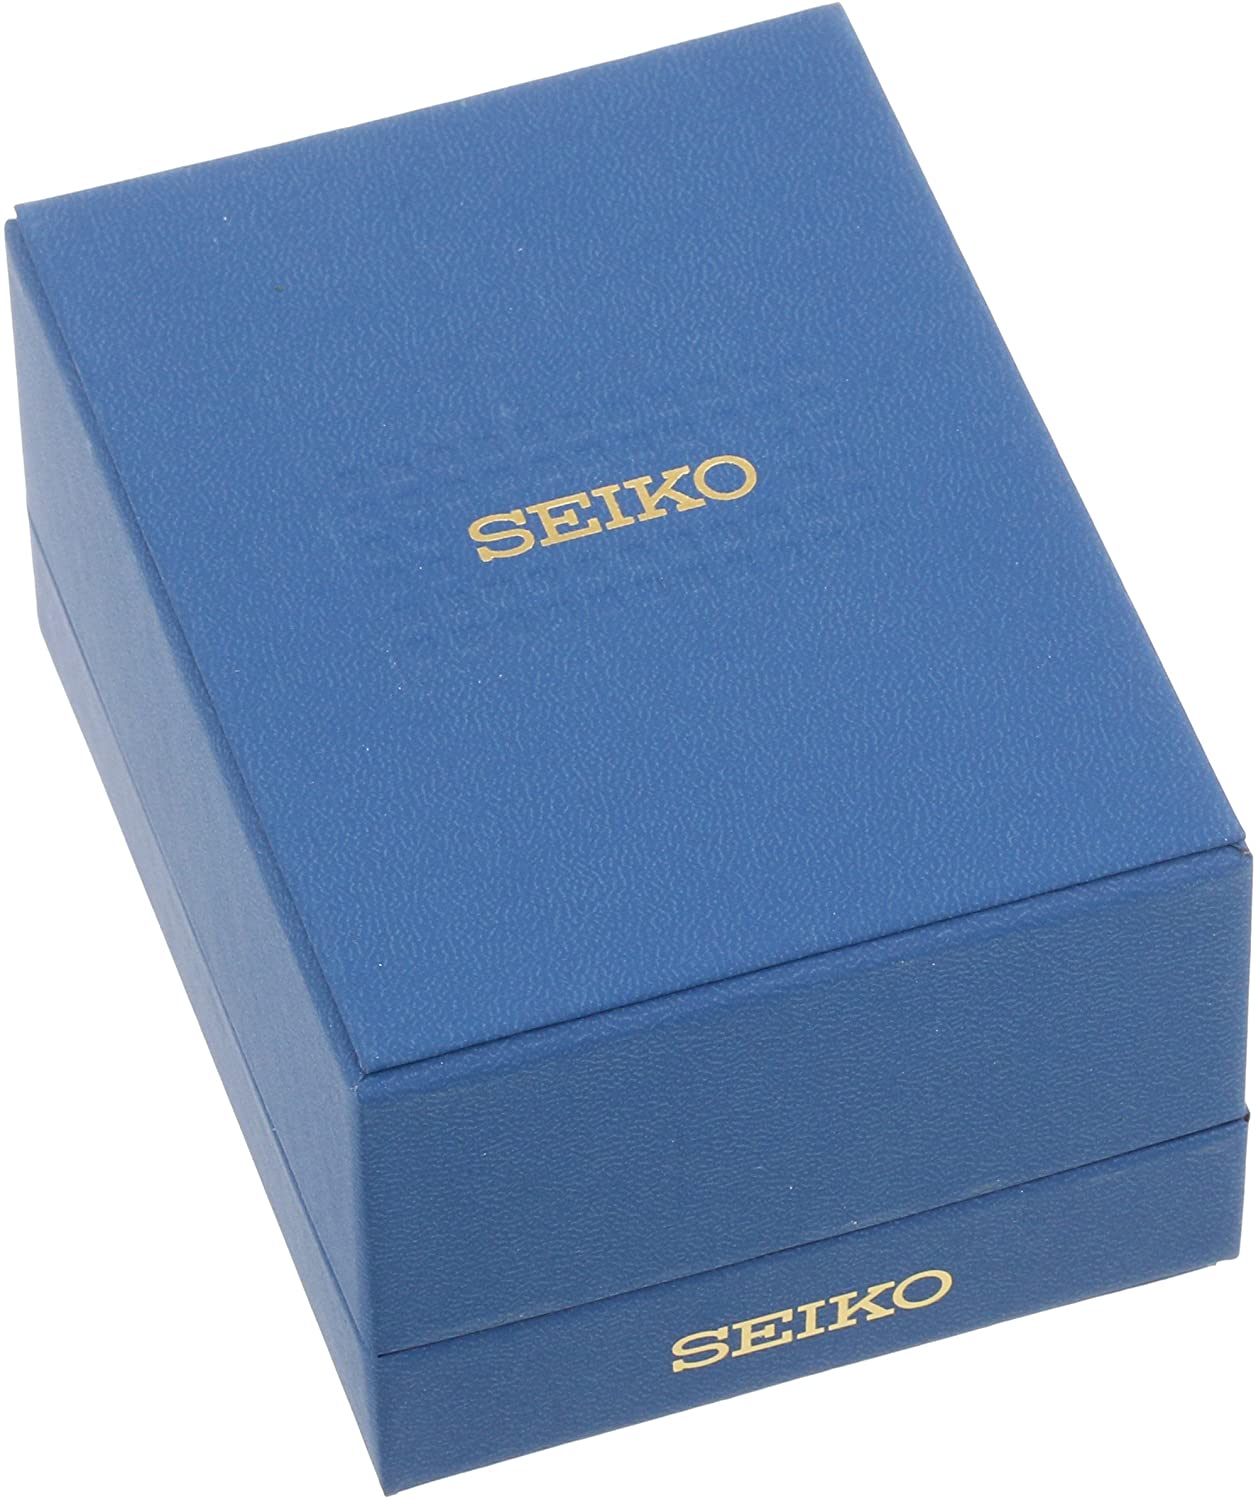 Seiko Men's SNK607 Automatic Black Dial Watch